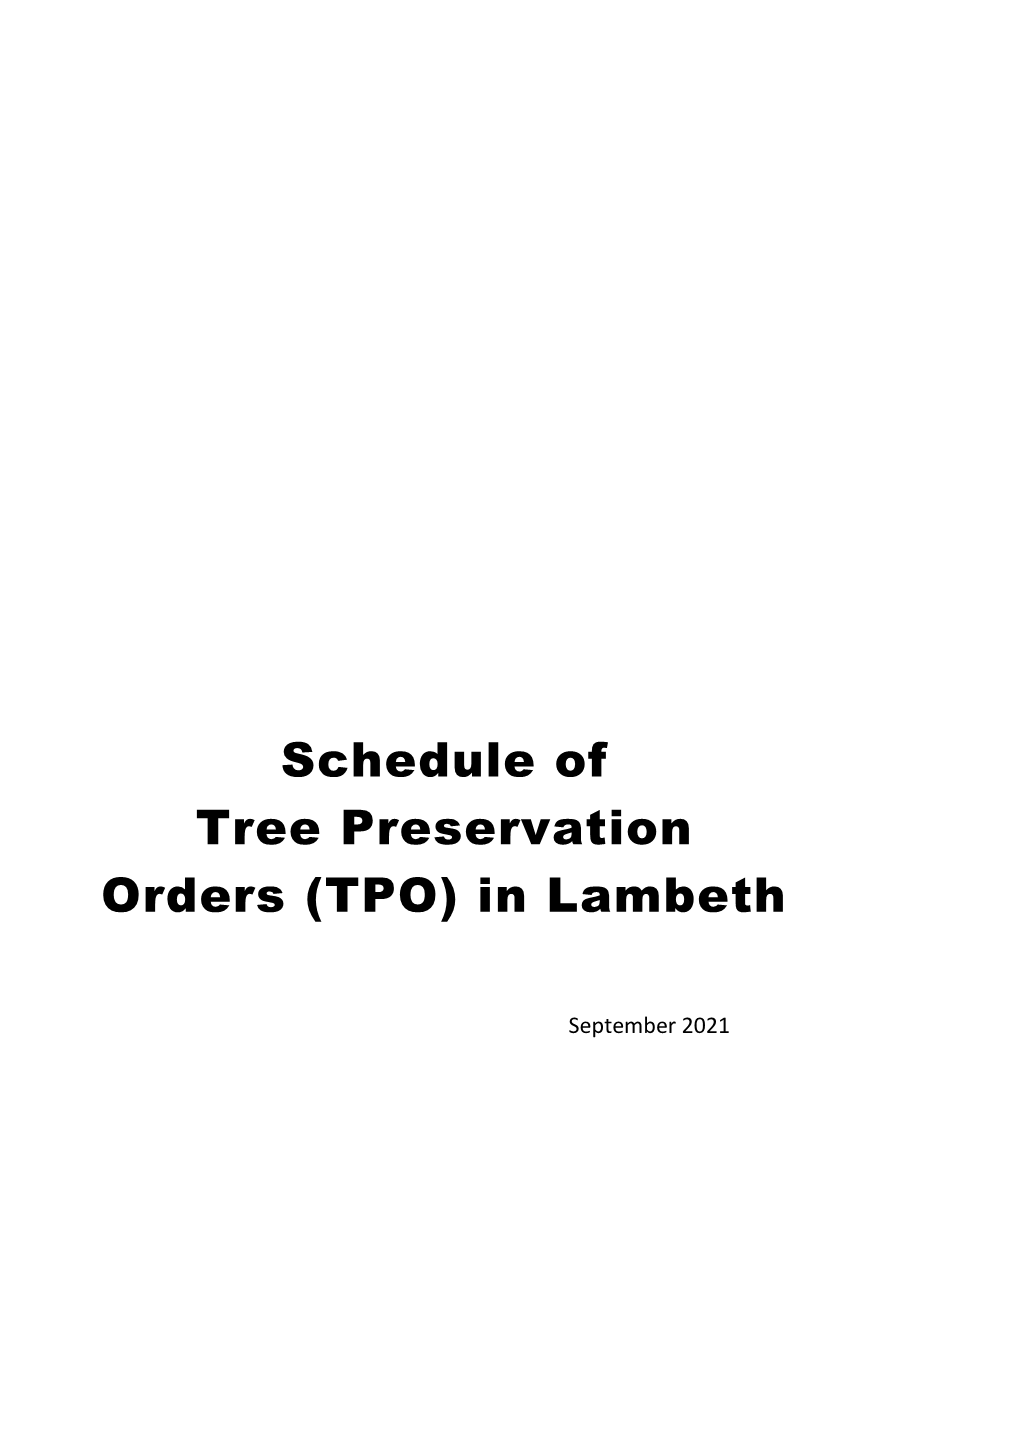 Schedule of Tree Preservation Orders (TPO) in Lambeth